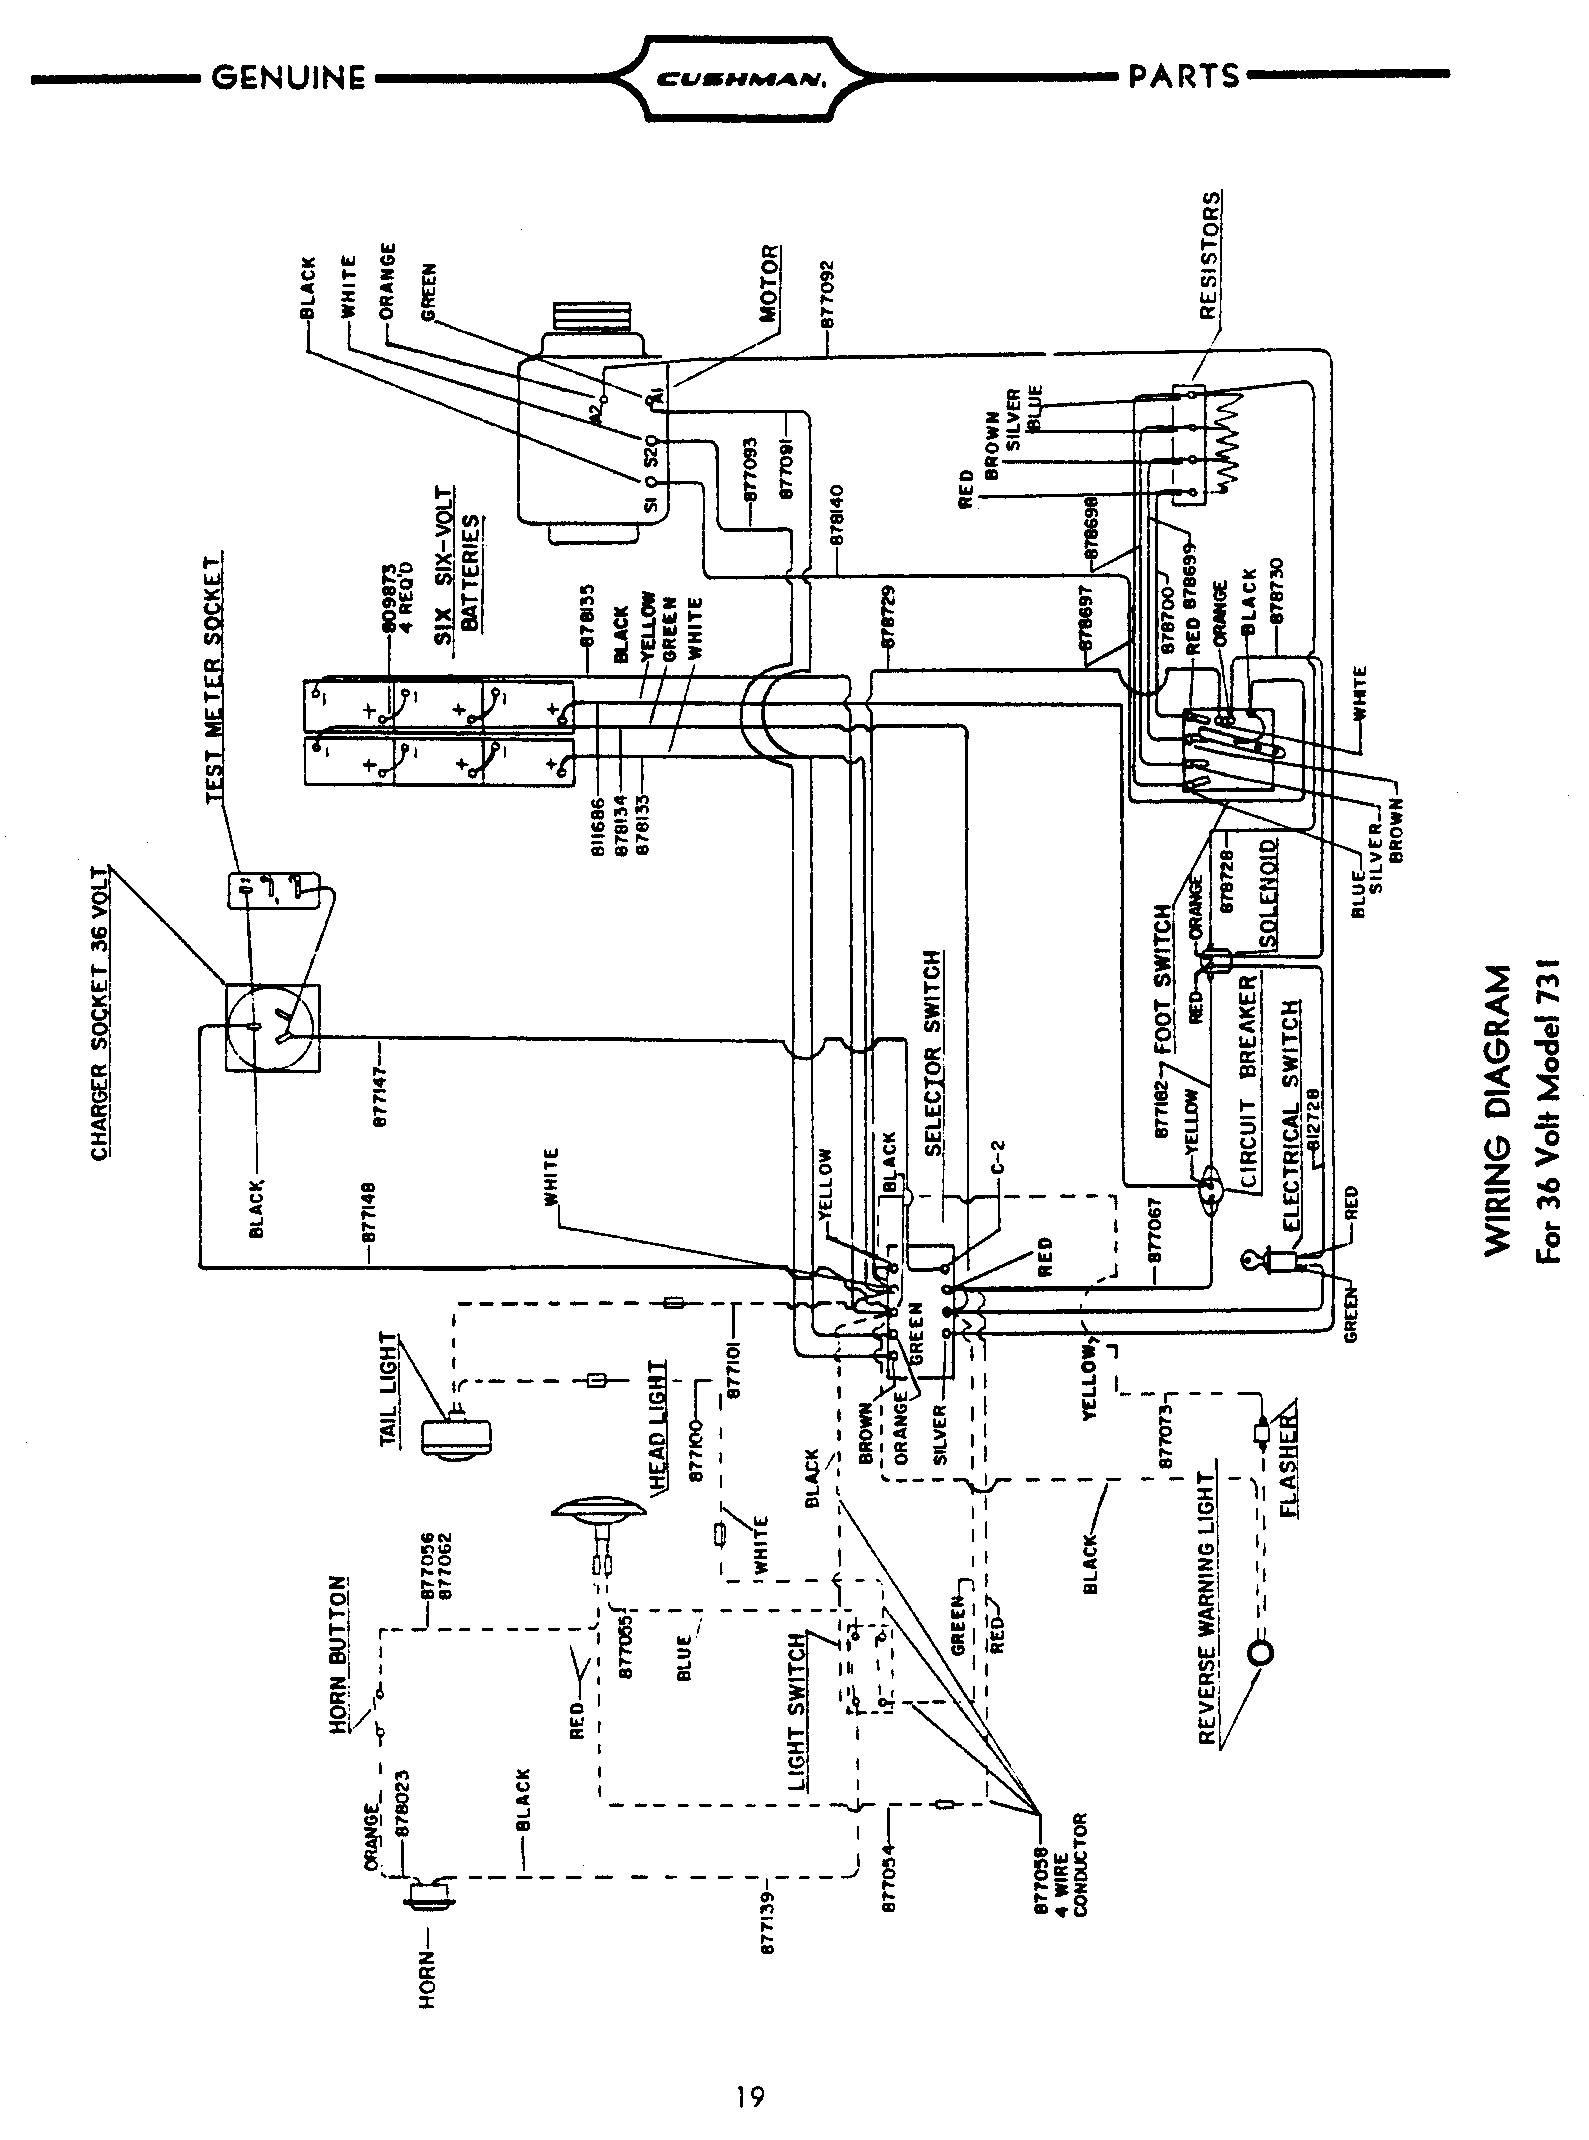 wiring diagram for 36 volt trolling motor